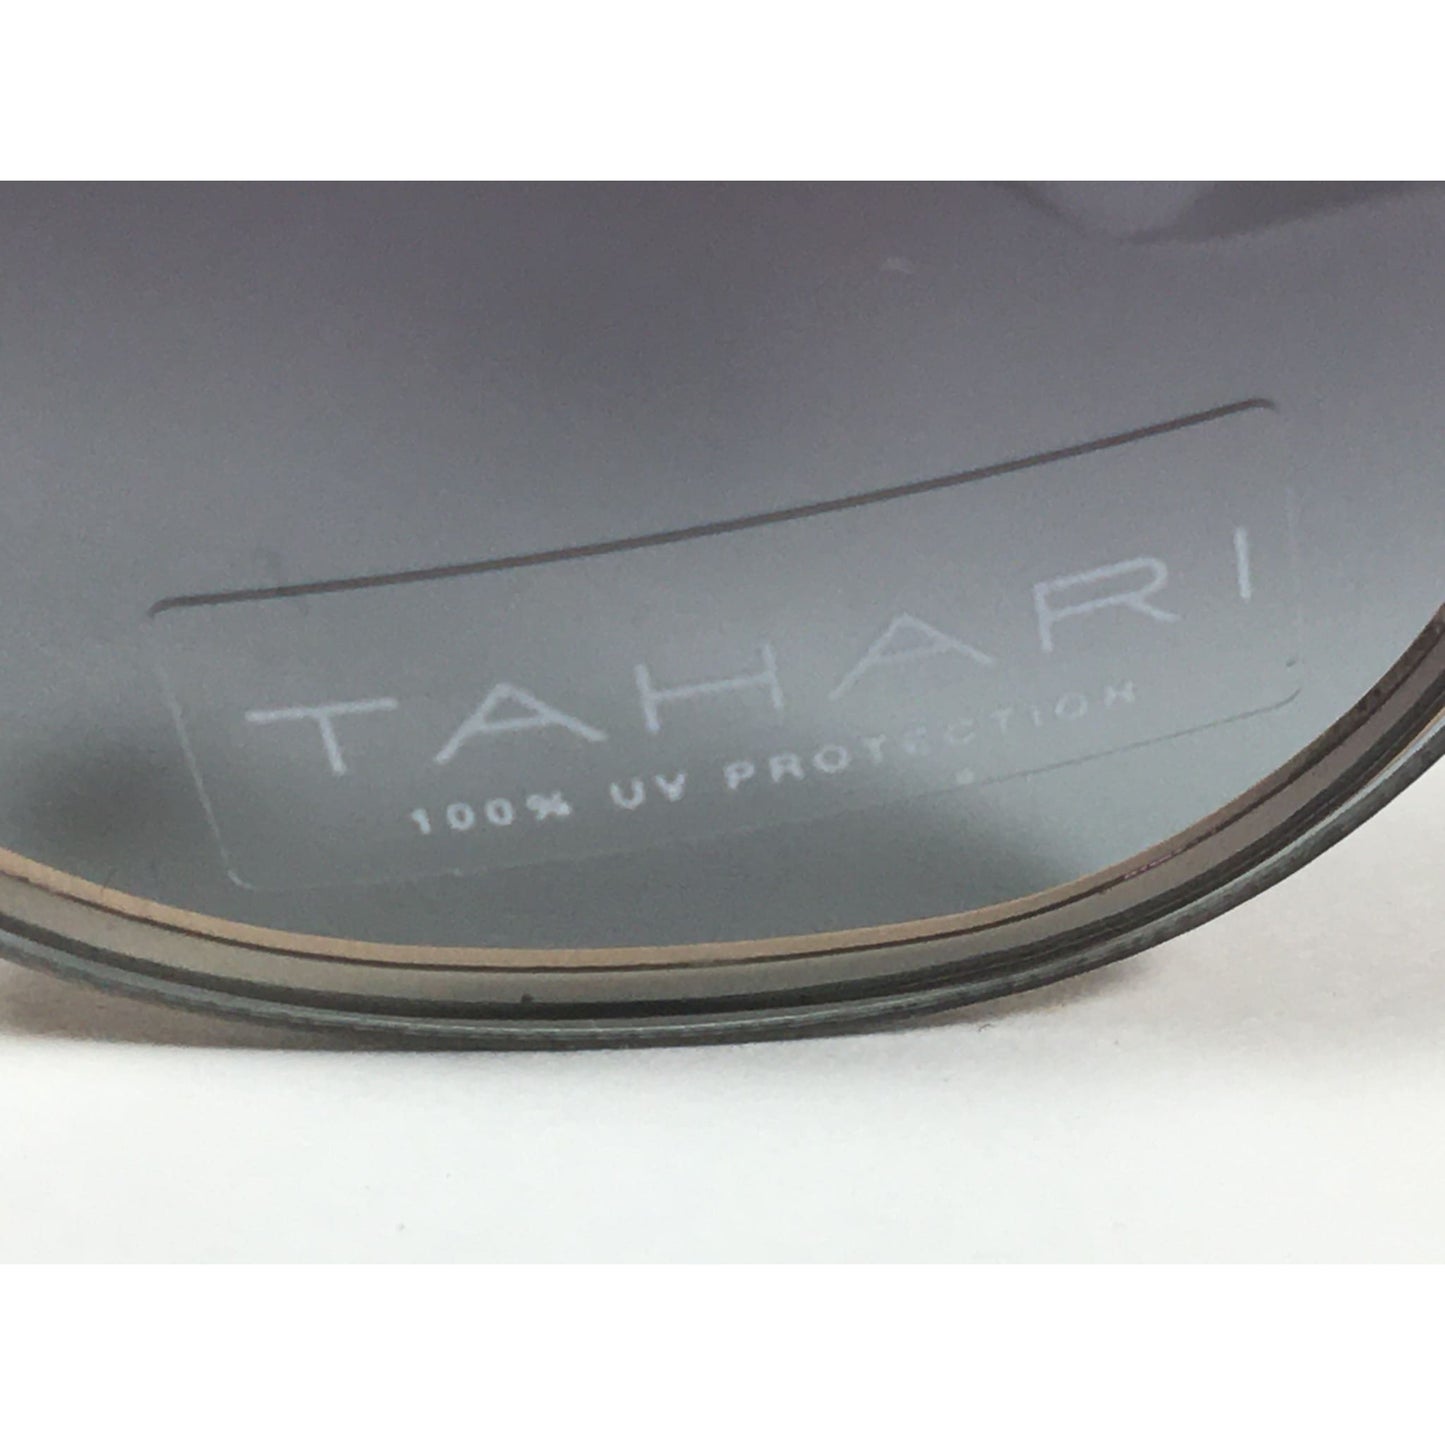 Tahari Rimless Cat Eye Sunglasses Black Gold Green Gray Gradient Lens TH652 GLDOX - Sunglasses